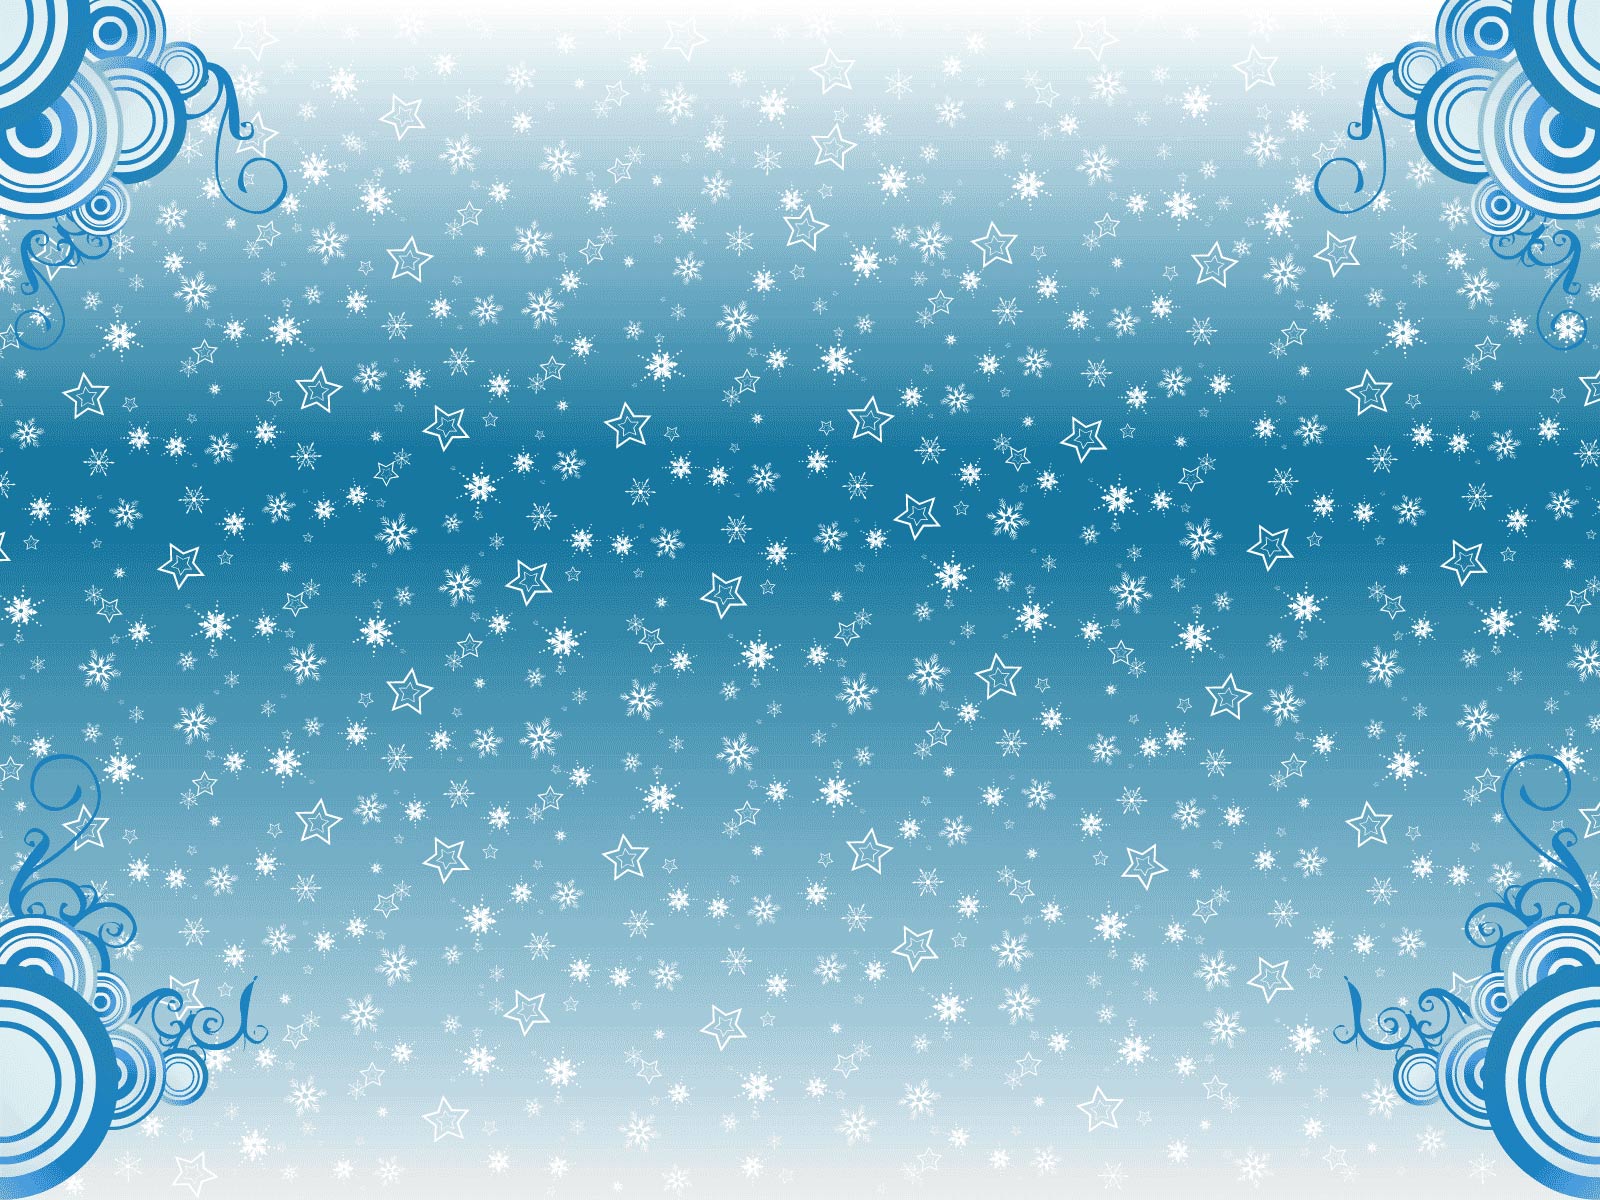  free Get Background winter Desktop Wallpaper and make this wallpaper